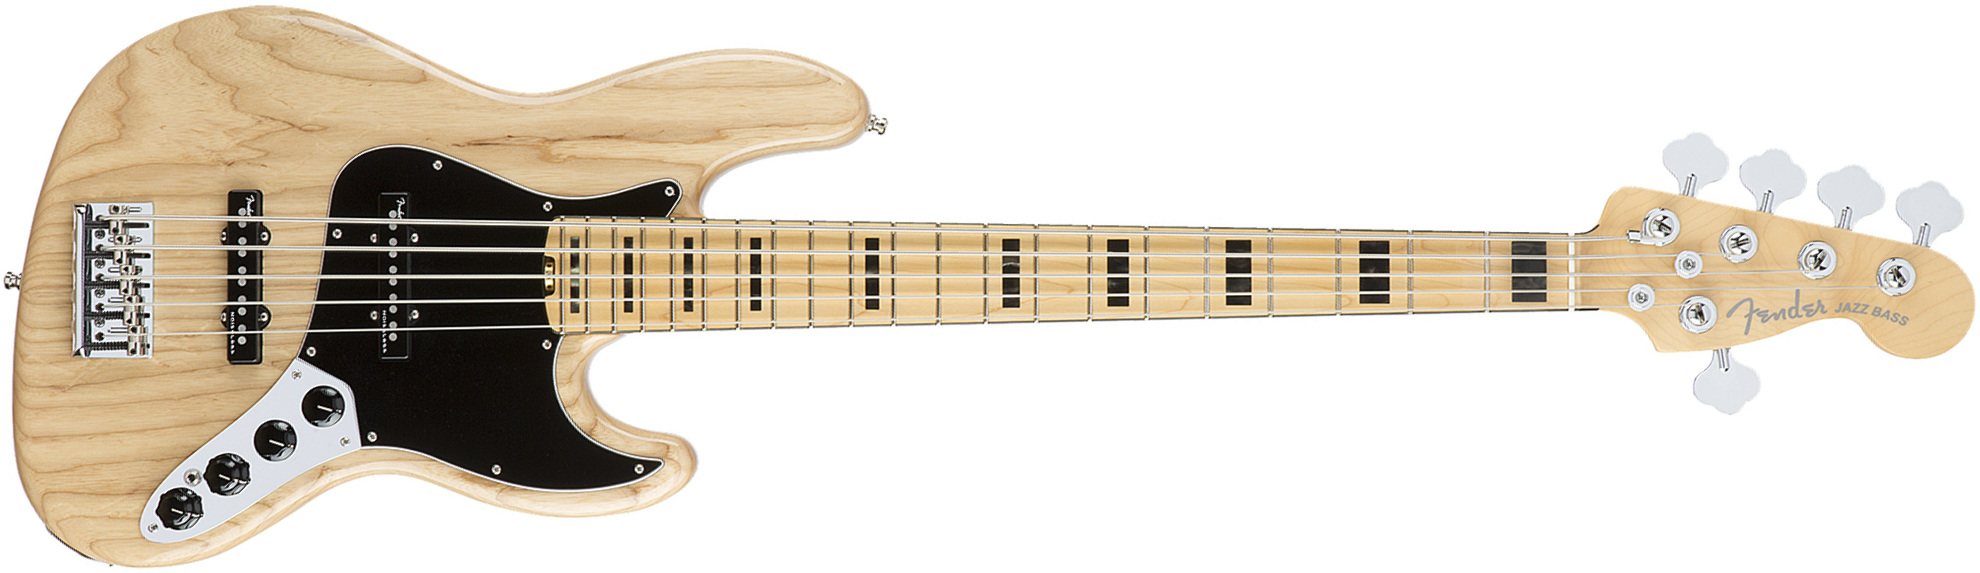 Fender Jazz Bass American Elite V Ash 5 Cordes 2016 (usa, Mn) - Natural - Solidbody E-bass - Main picture